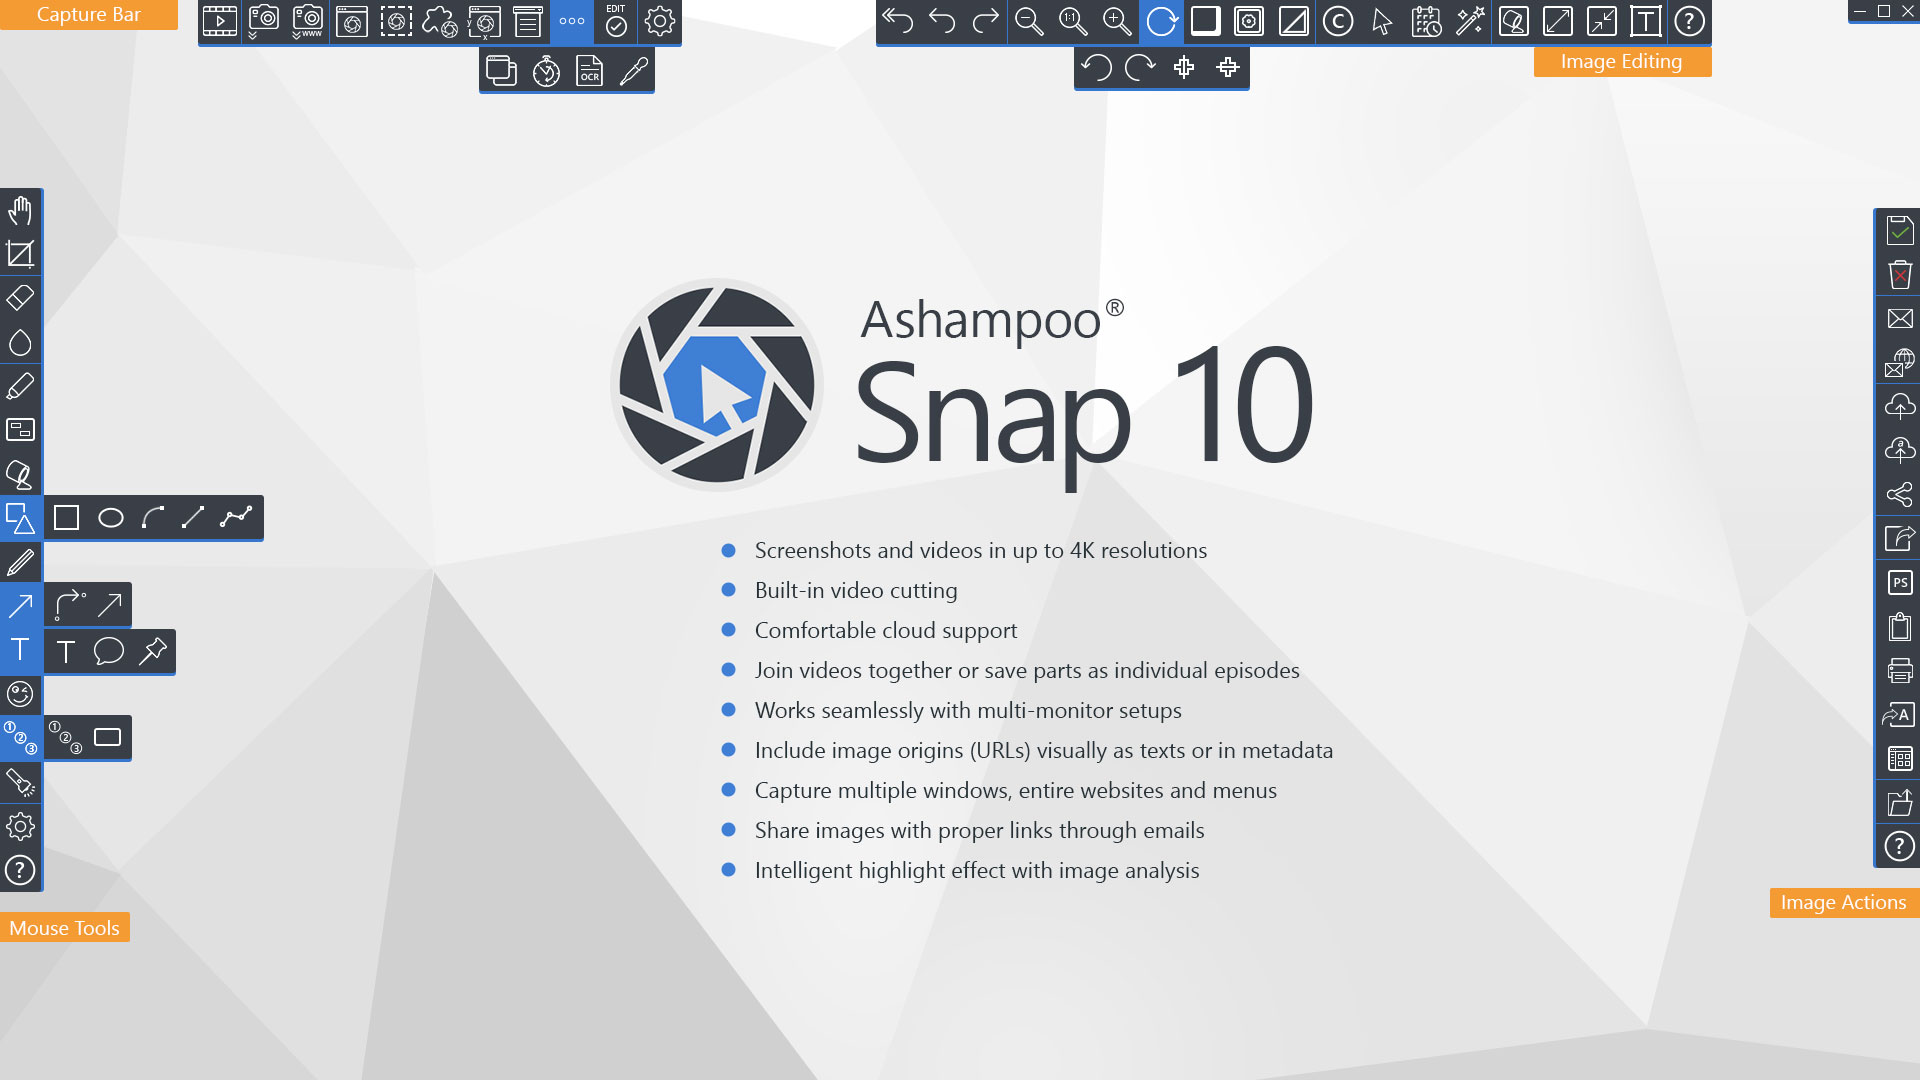 [Image: scr_ashampoo_snap_10_overview_functions_en.jpg]